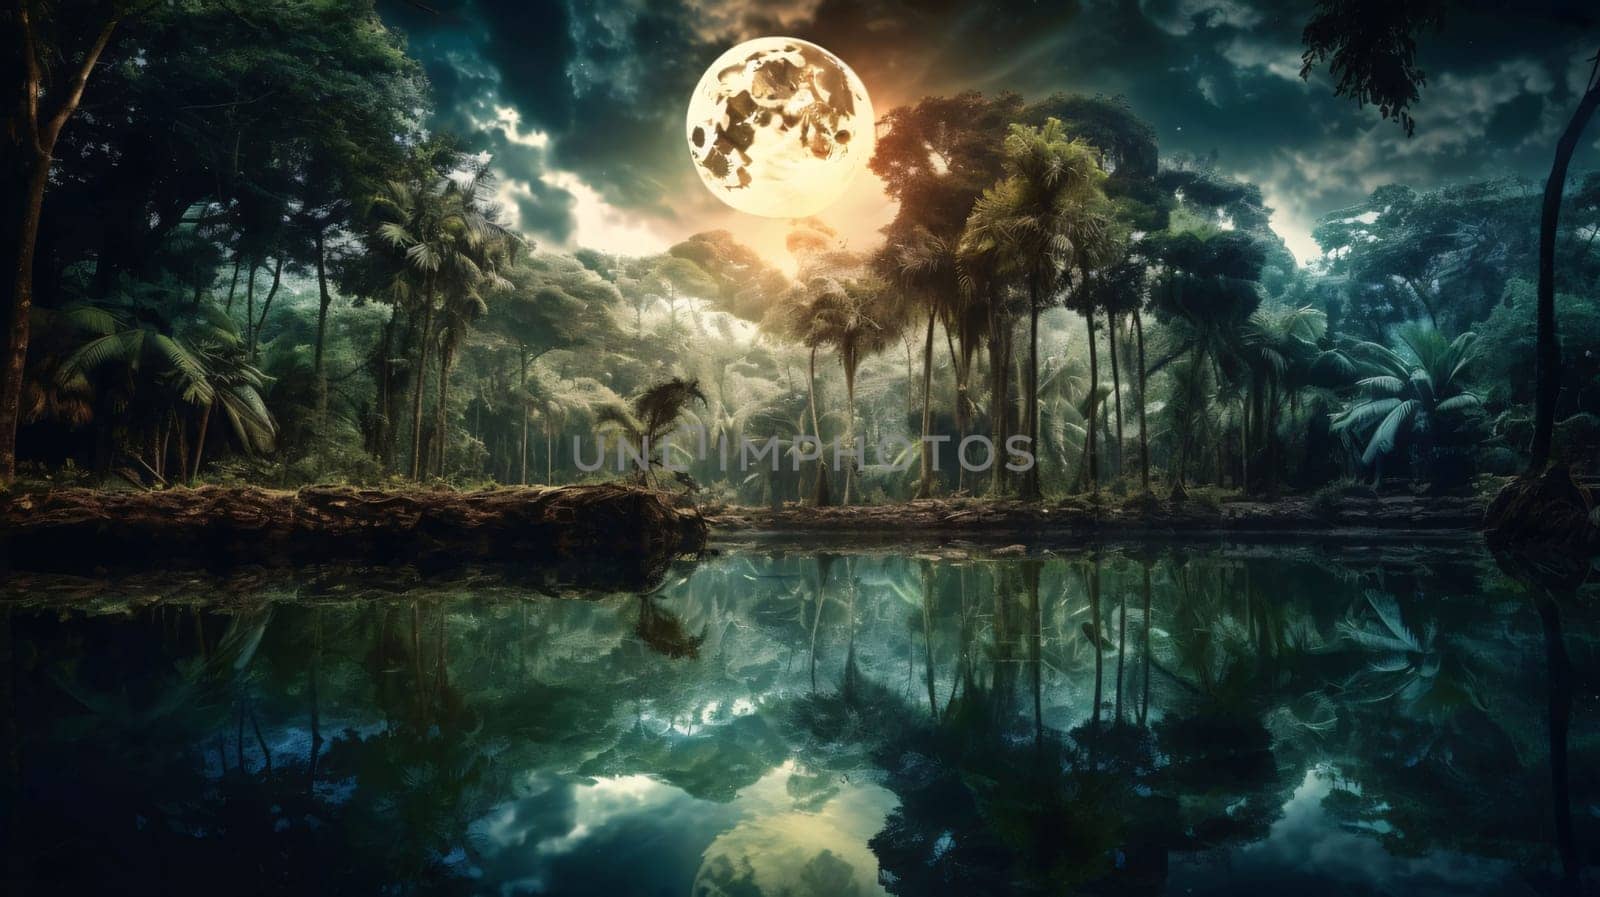 Banner: Full moon over tropical jungle forest. 3D Rendering. Fantasy landscape